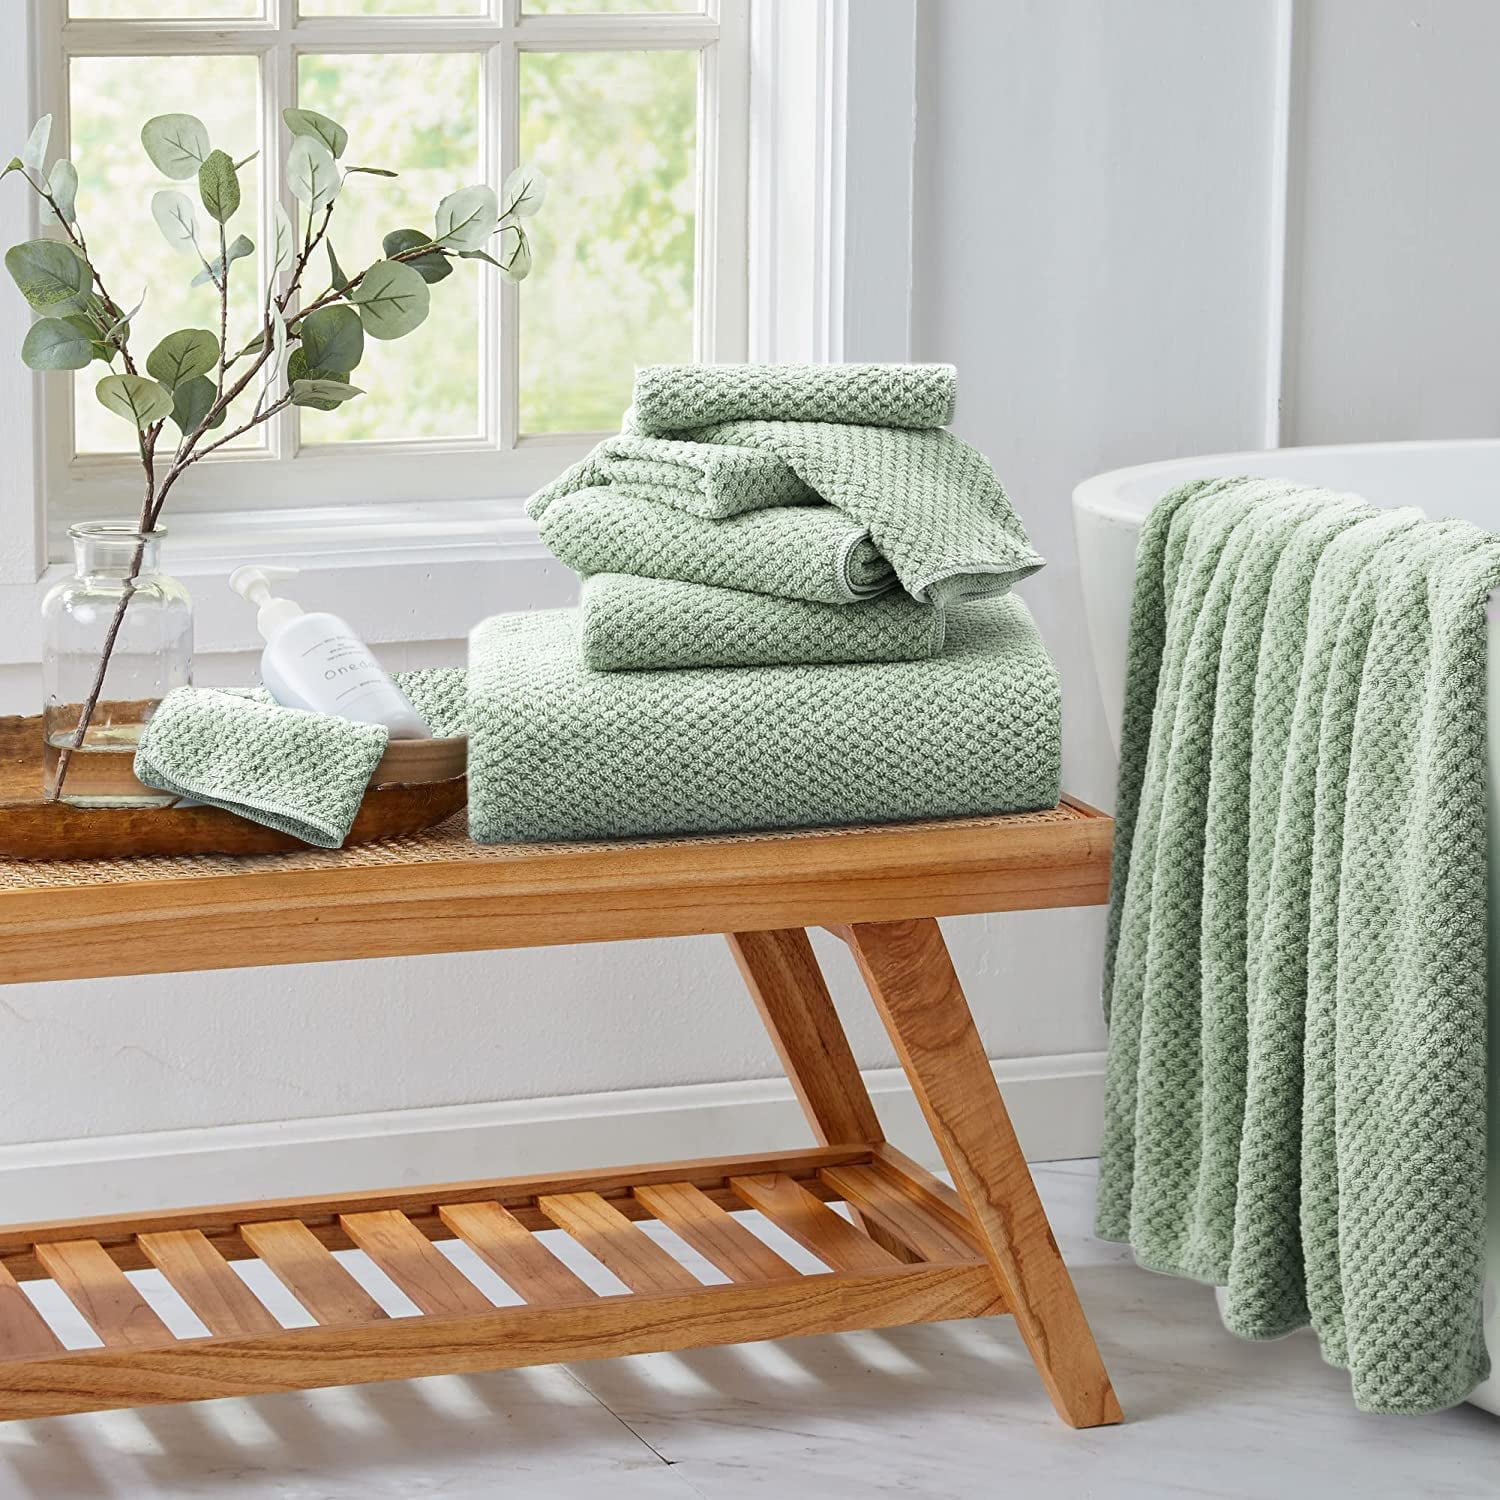 Utopia Towels Lavish Bath Bundle - 1 600 GSM Towel Set Sage Green (2 Bath  Towels, 2 Hand Towels, 4 Washcloths) with 1 Jumbo Bath Sheet - 600 GSM 2